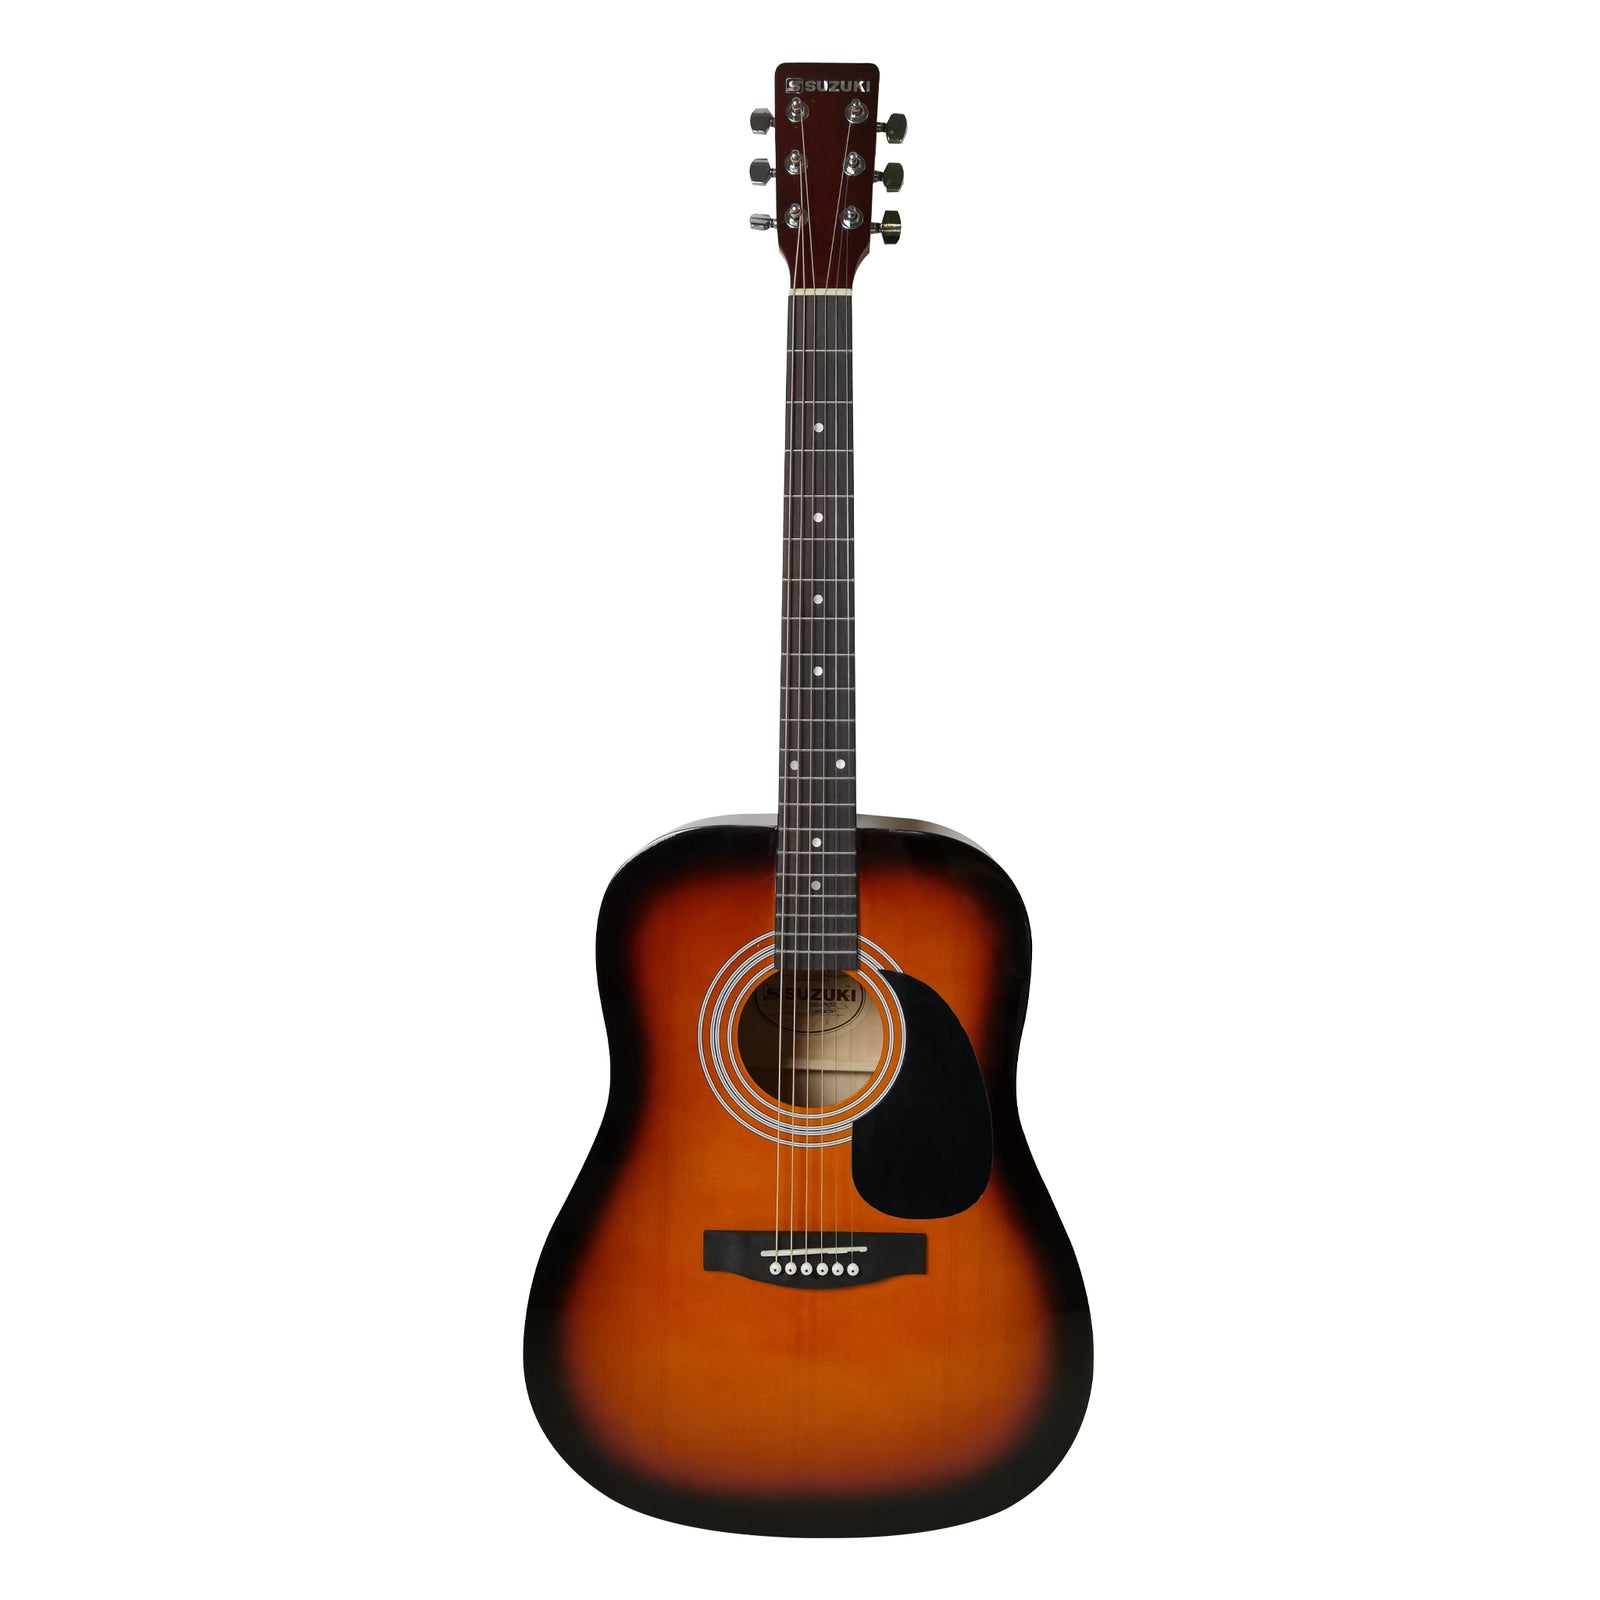 Suzuki SDG-6PK Acoustic Guitar Package Sunburst (BS)